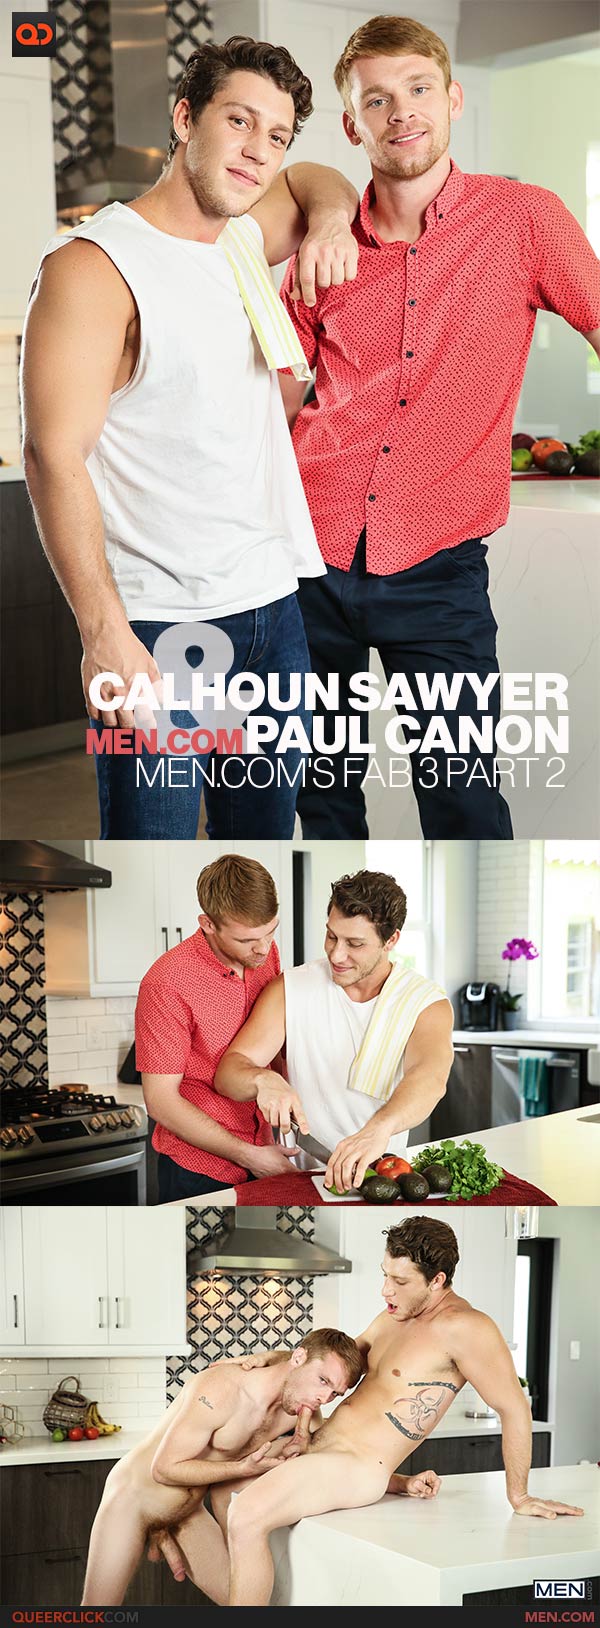 Men.com: Paul Canon and Calhoun Sawyer